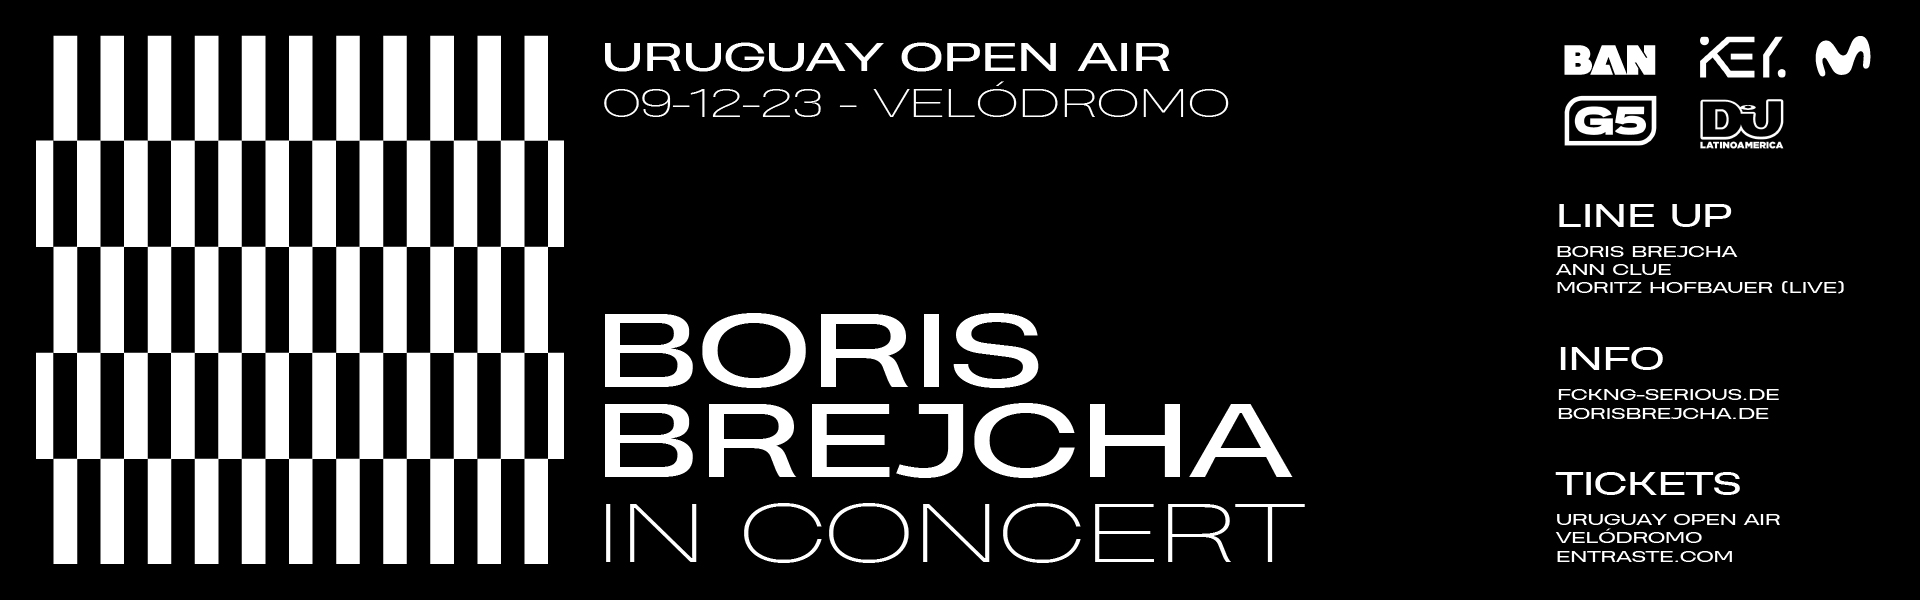 Flyer Boris Brejcha in Concert Uruguay